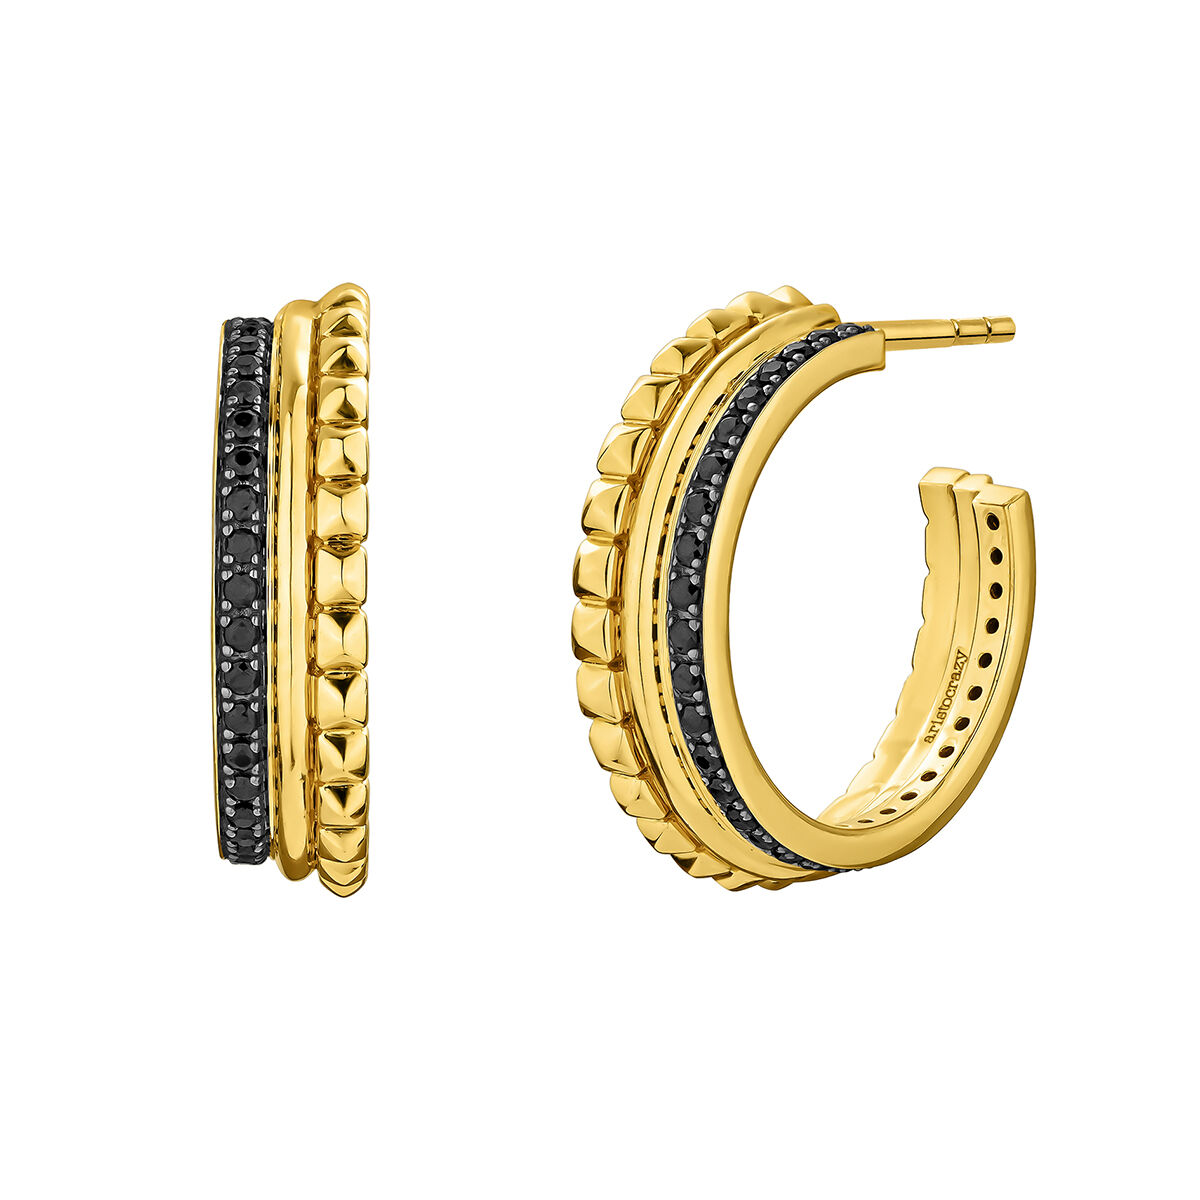 Medium hoop earrings in 18ct gold-plated silver with raised detail and black spinel gemstones, J04909-02-BSN, hi-res